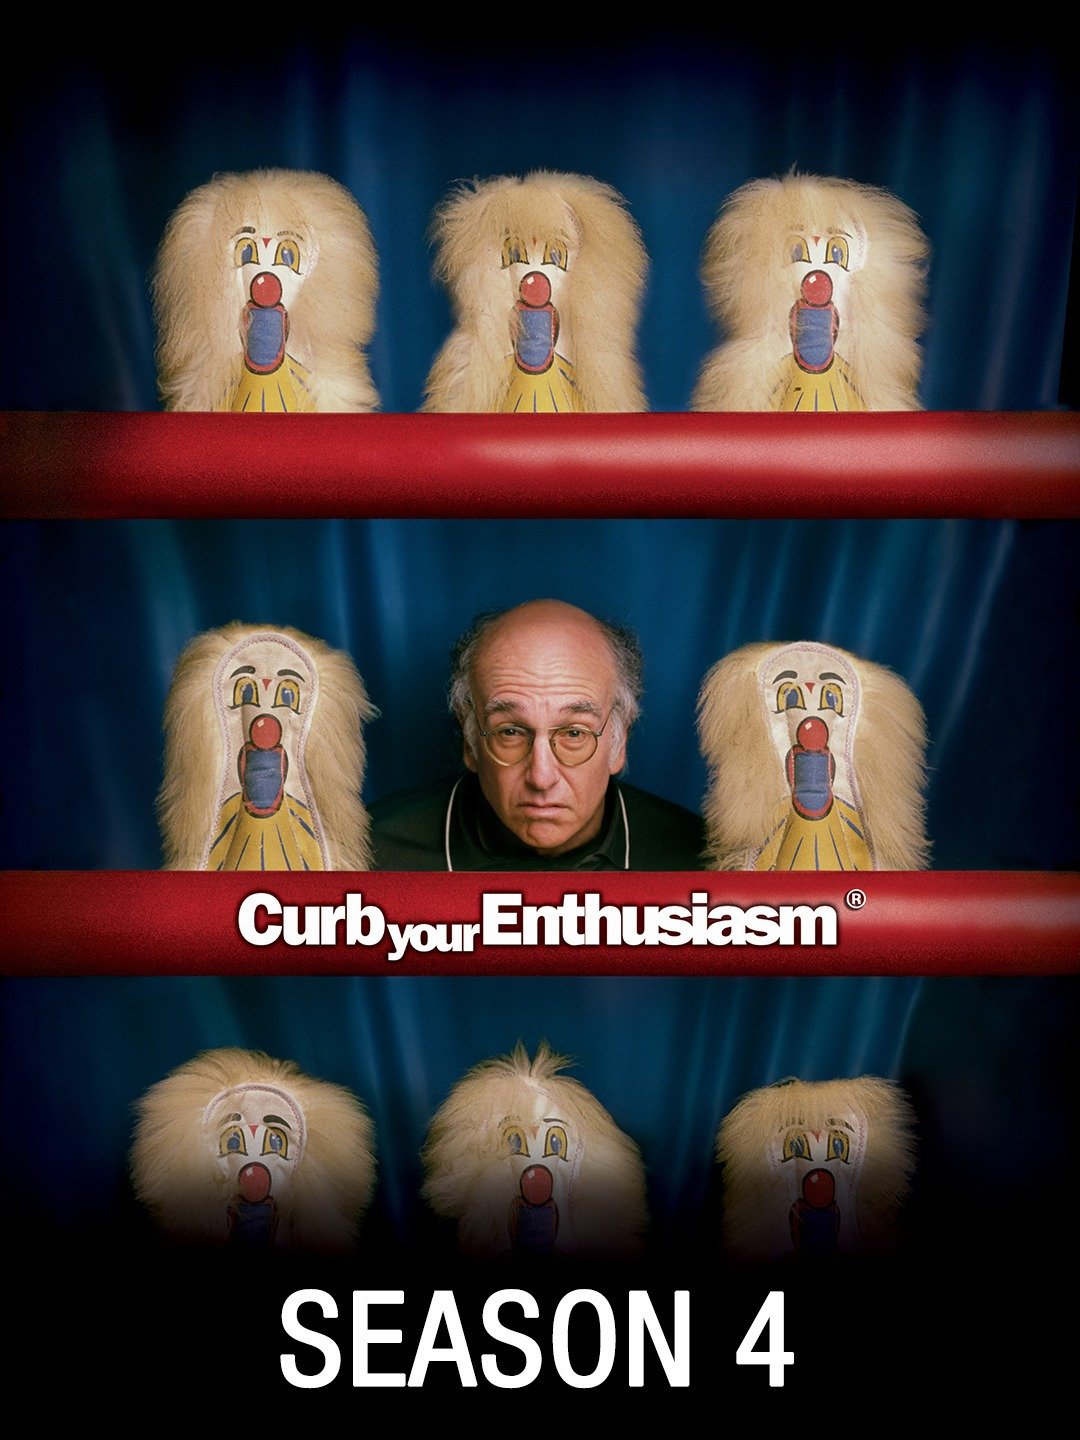 curb your enthusiasm season 7 dvd cover